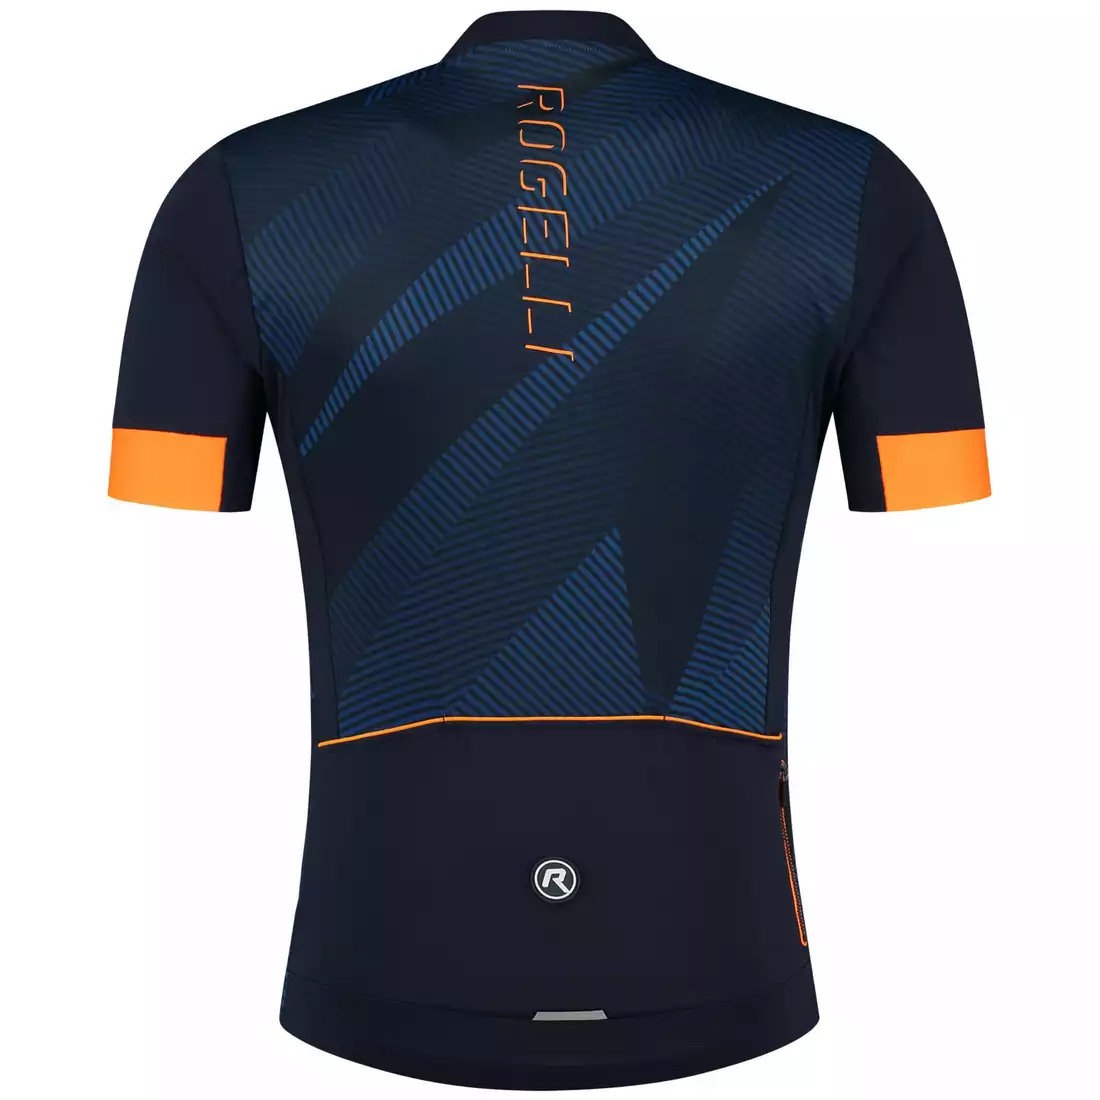 Rogelli DUSK pánský cyklistický dres, modro-oranžová